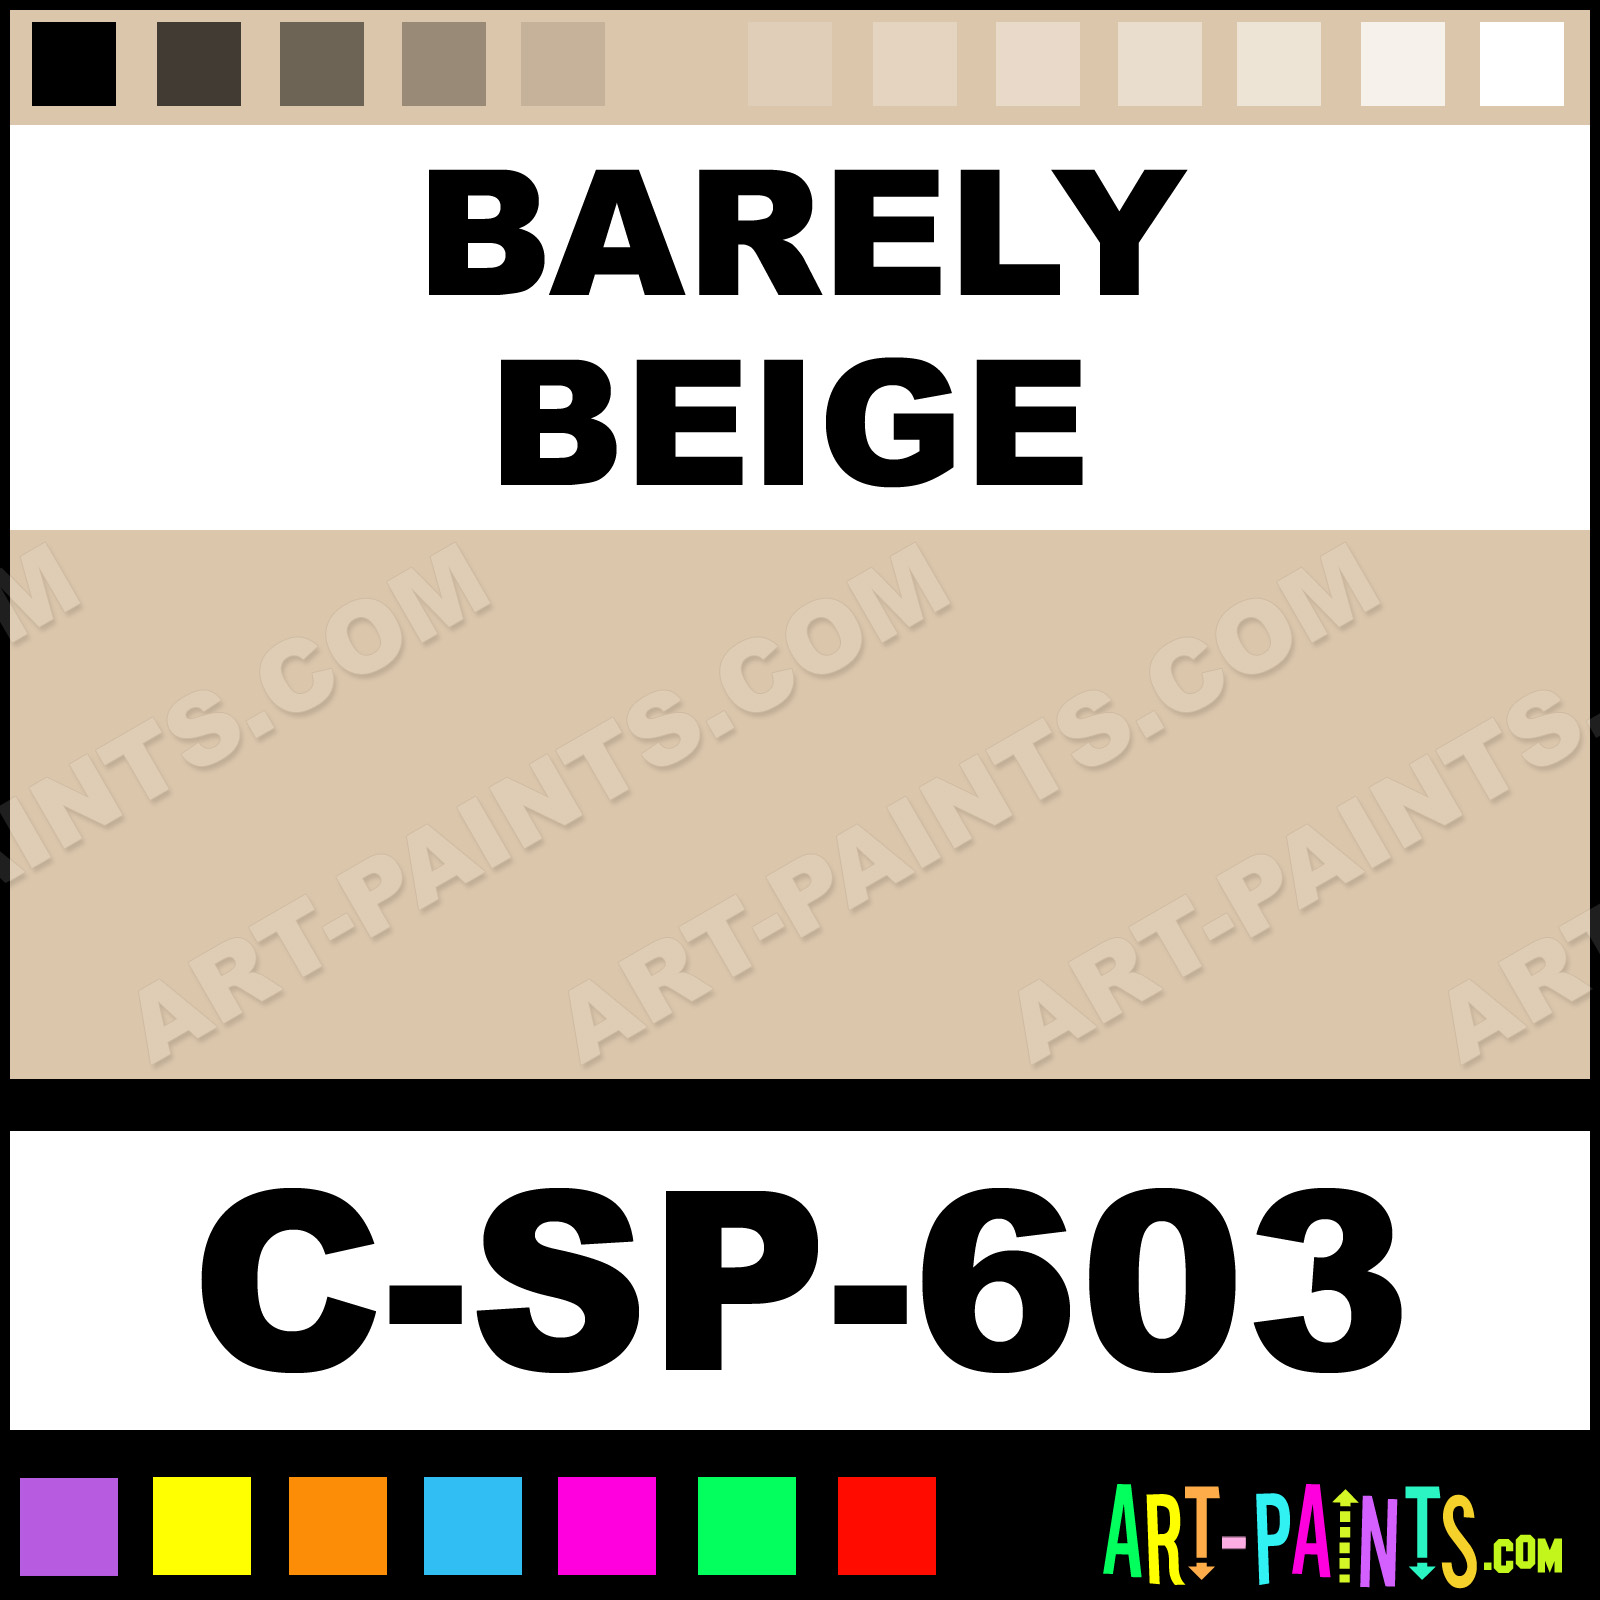 Barely Beige 600 Series Underglaze Ceramic Paints - C-SP-603 - Barely Beige  Paint, Barely Beige Color, Spectrum 600 Series Underglaze Porcelain,  Pottery, Bisque, Greenware Ceramic Paint, DBC6AB 